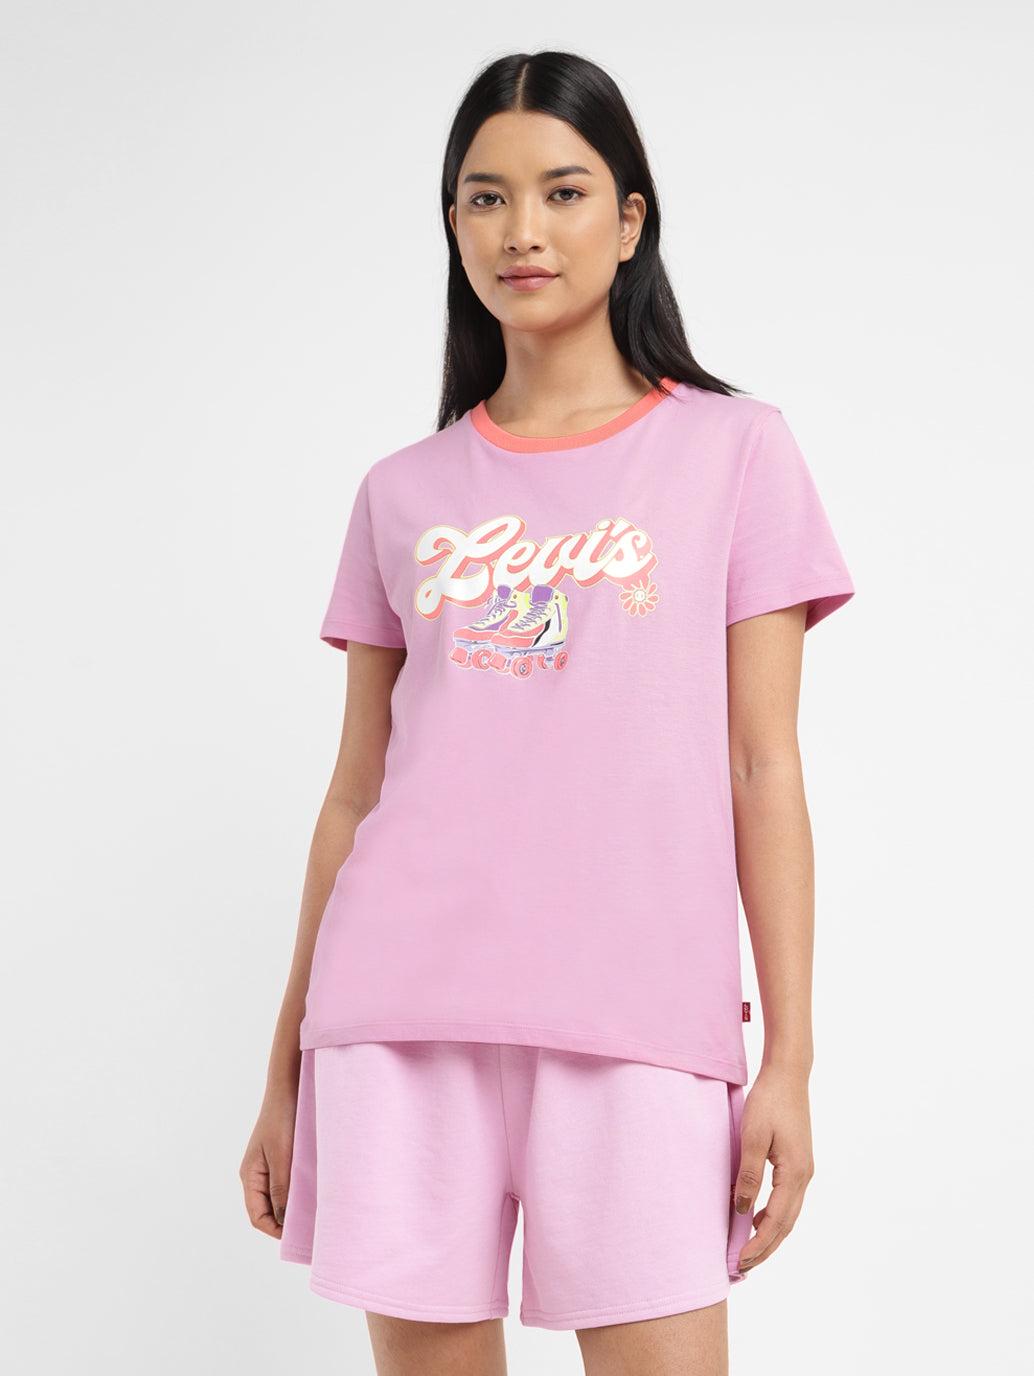 women's-graphic-print-crew-neck-t-shirt